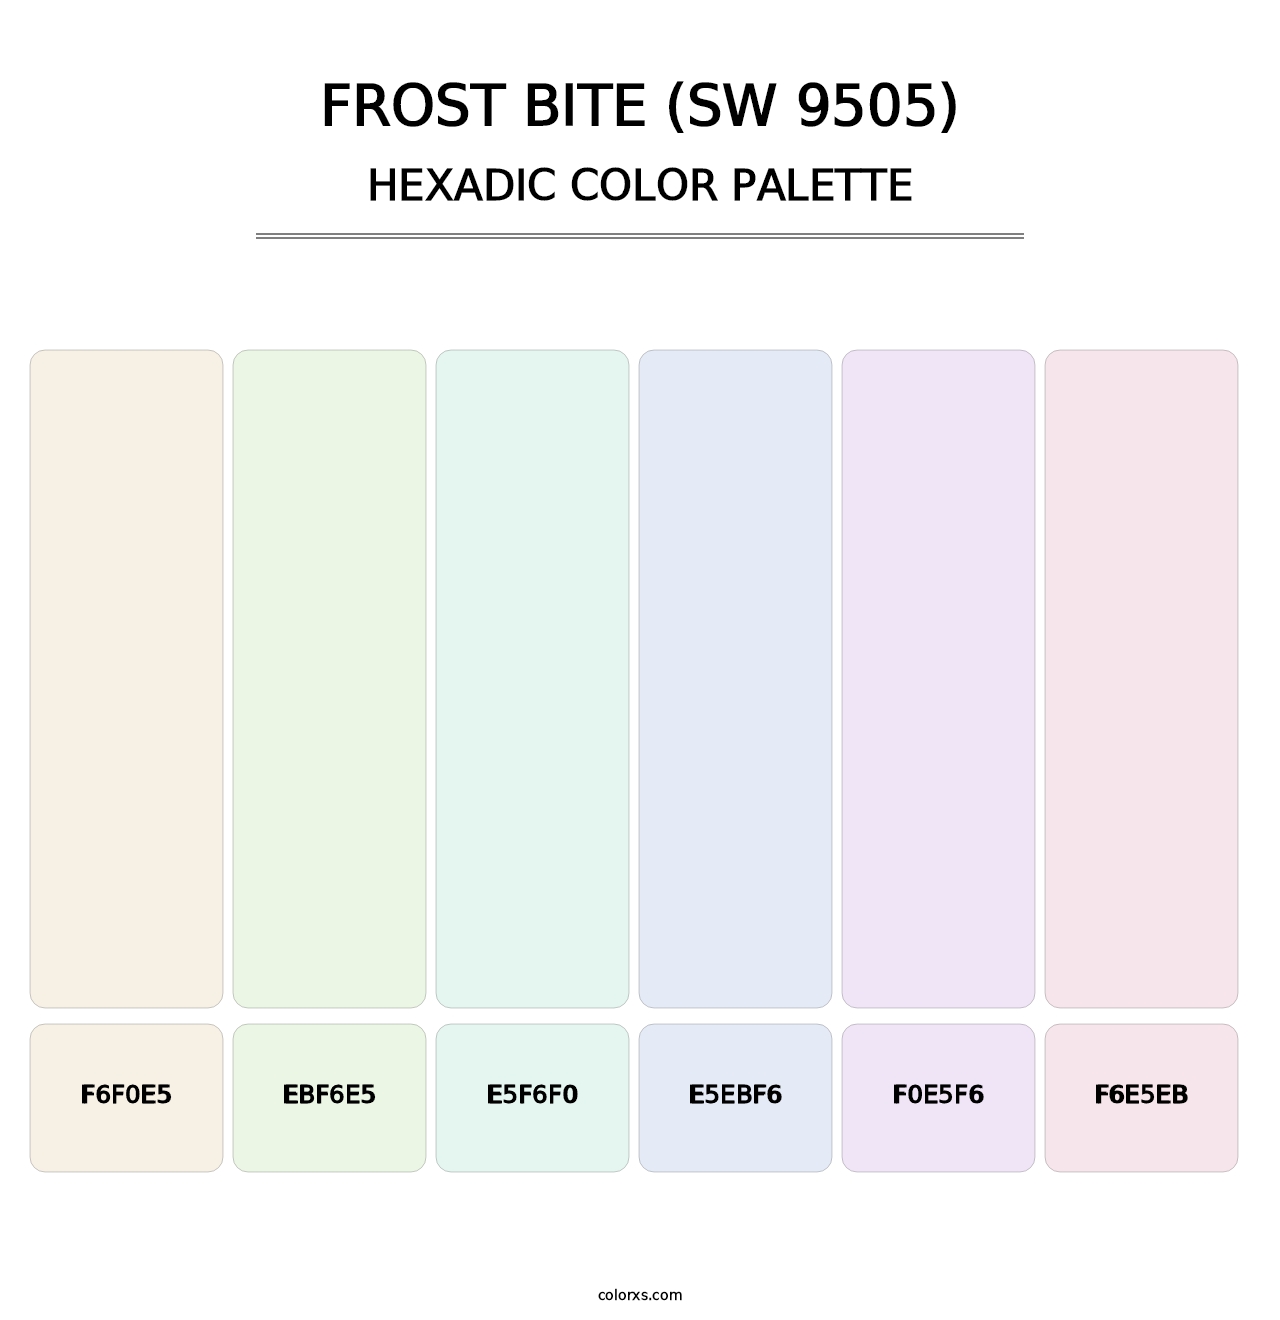 Frost Bite (SW 9505) - Hexadic Color Palette